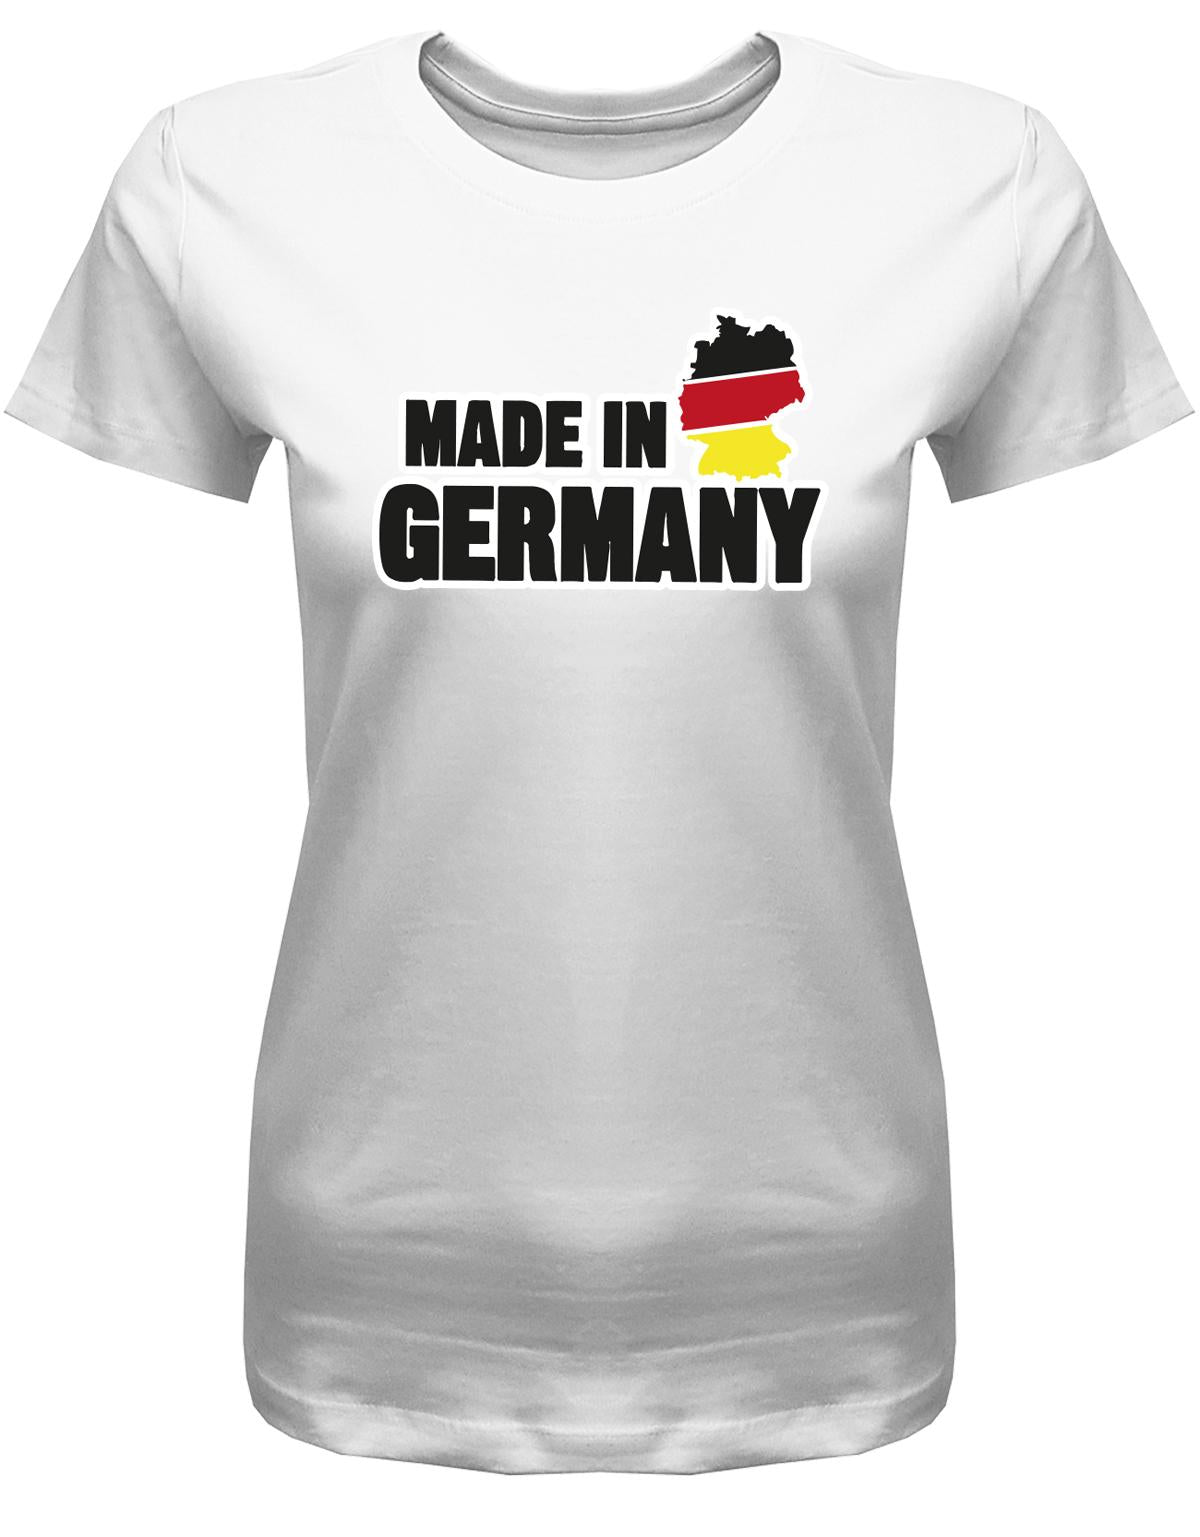 MAde-in-germany-Damen-Shirt-Weiss